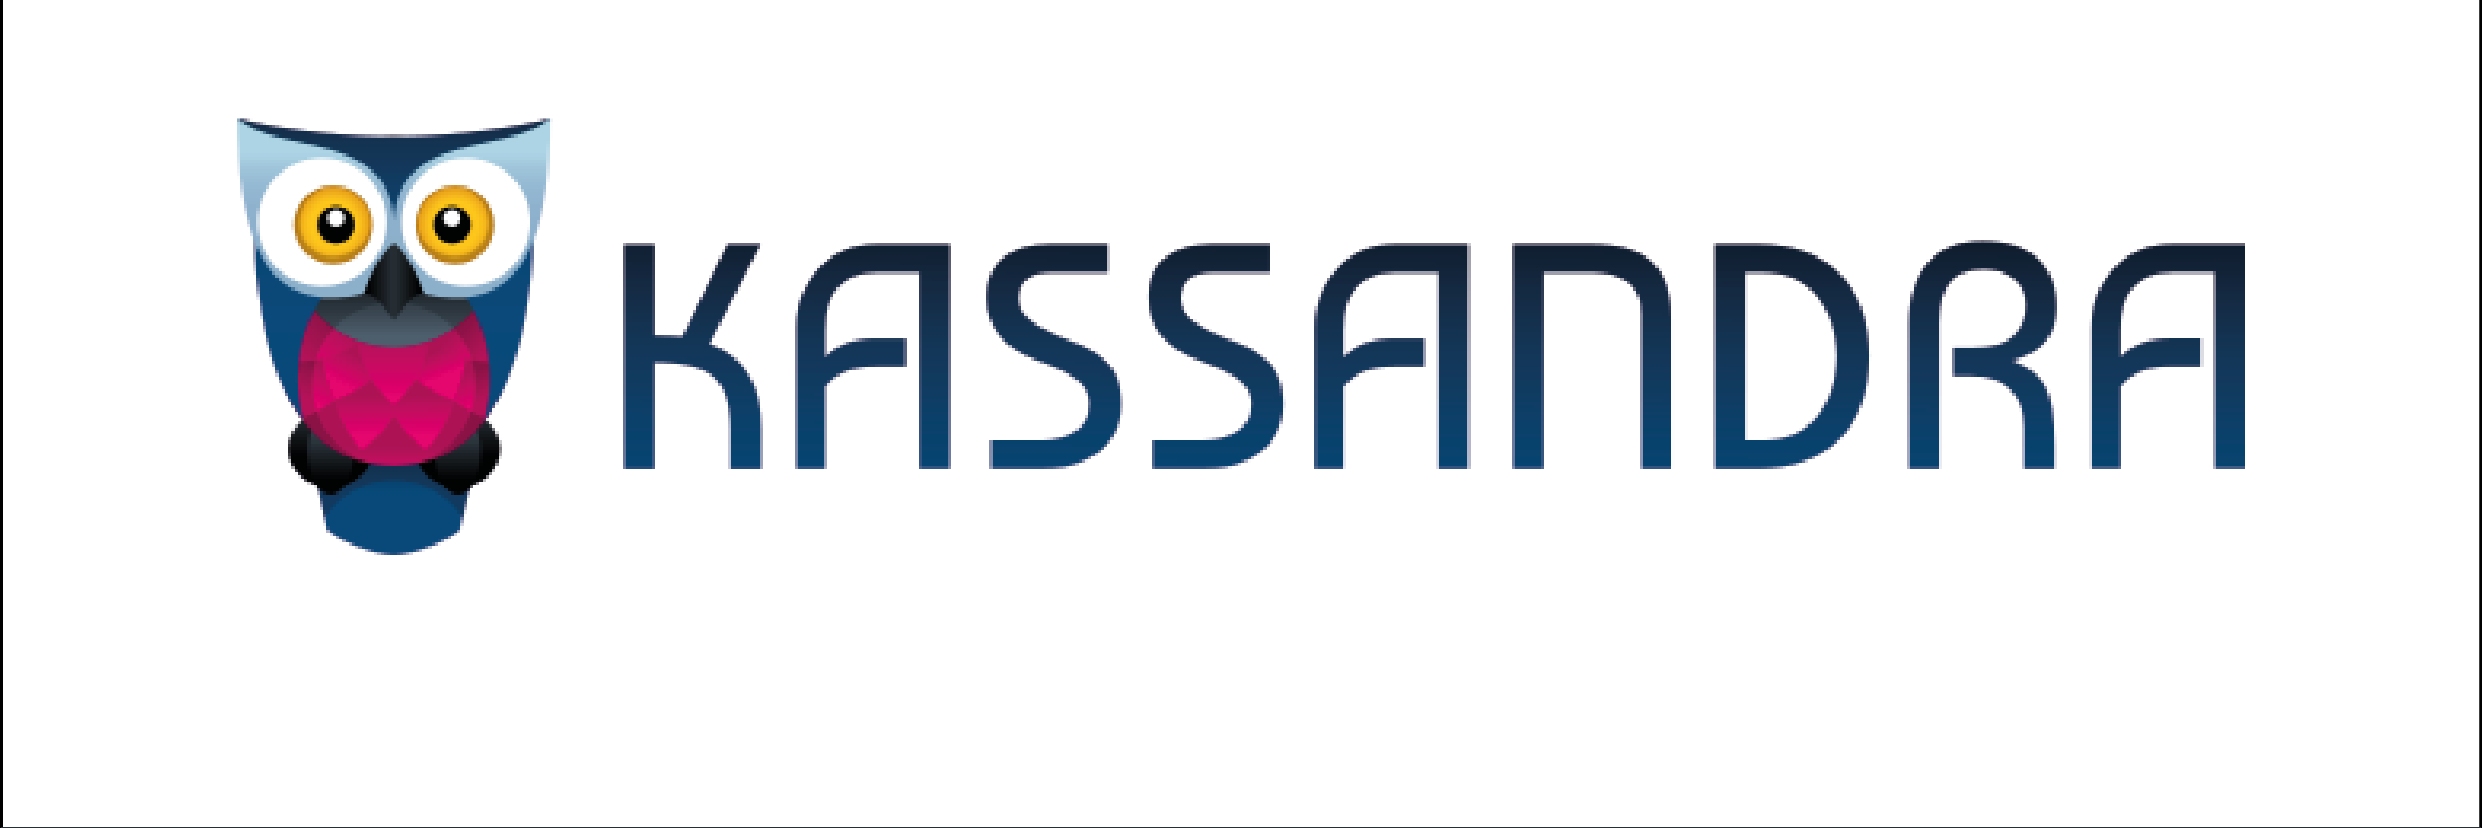 Kassandra Logo Design Wortbildmarke